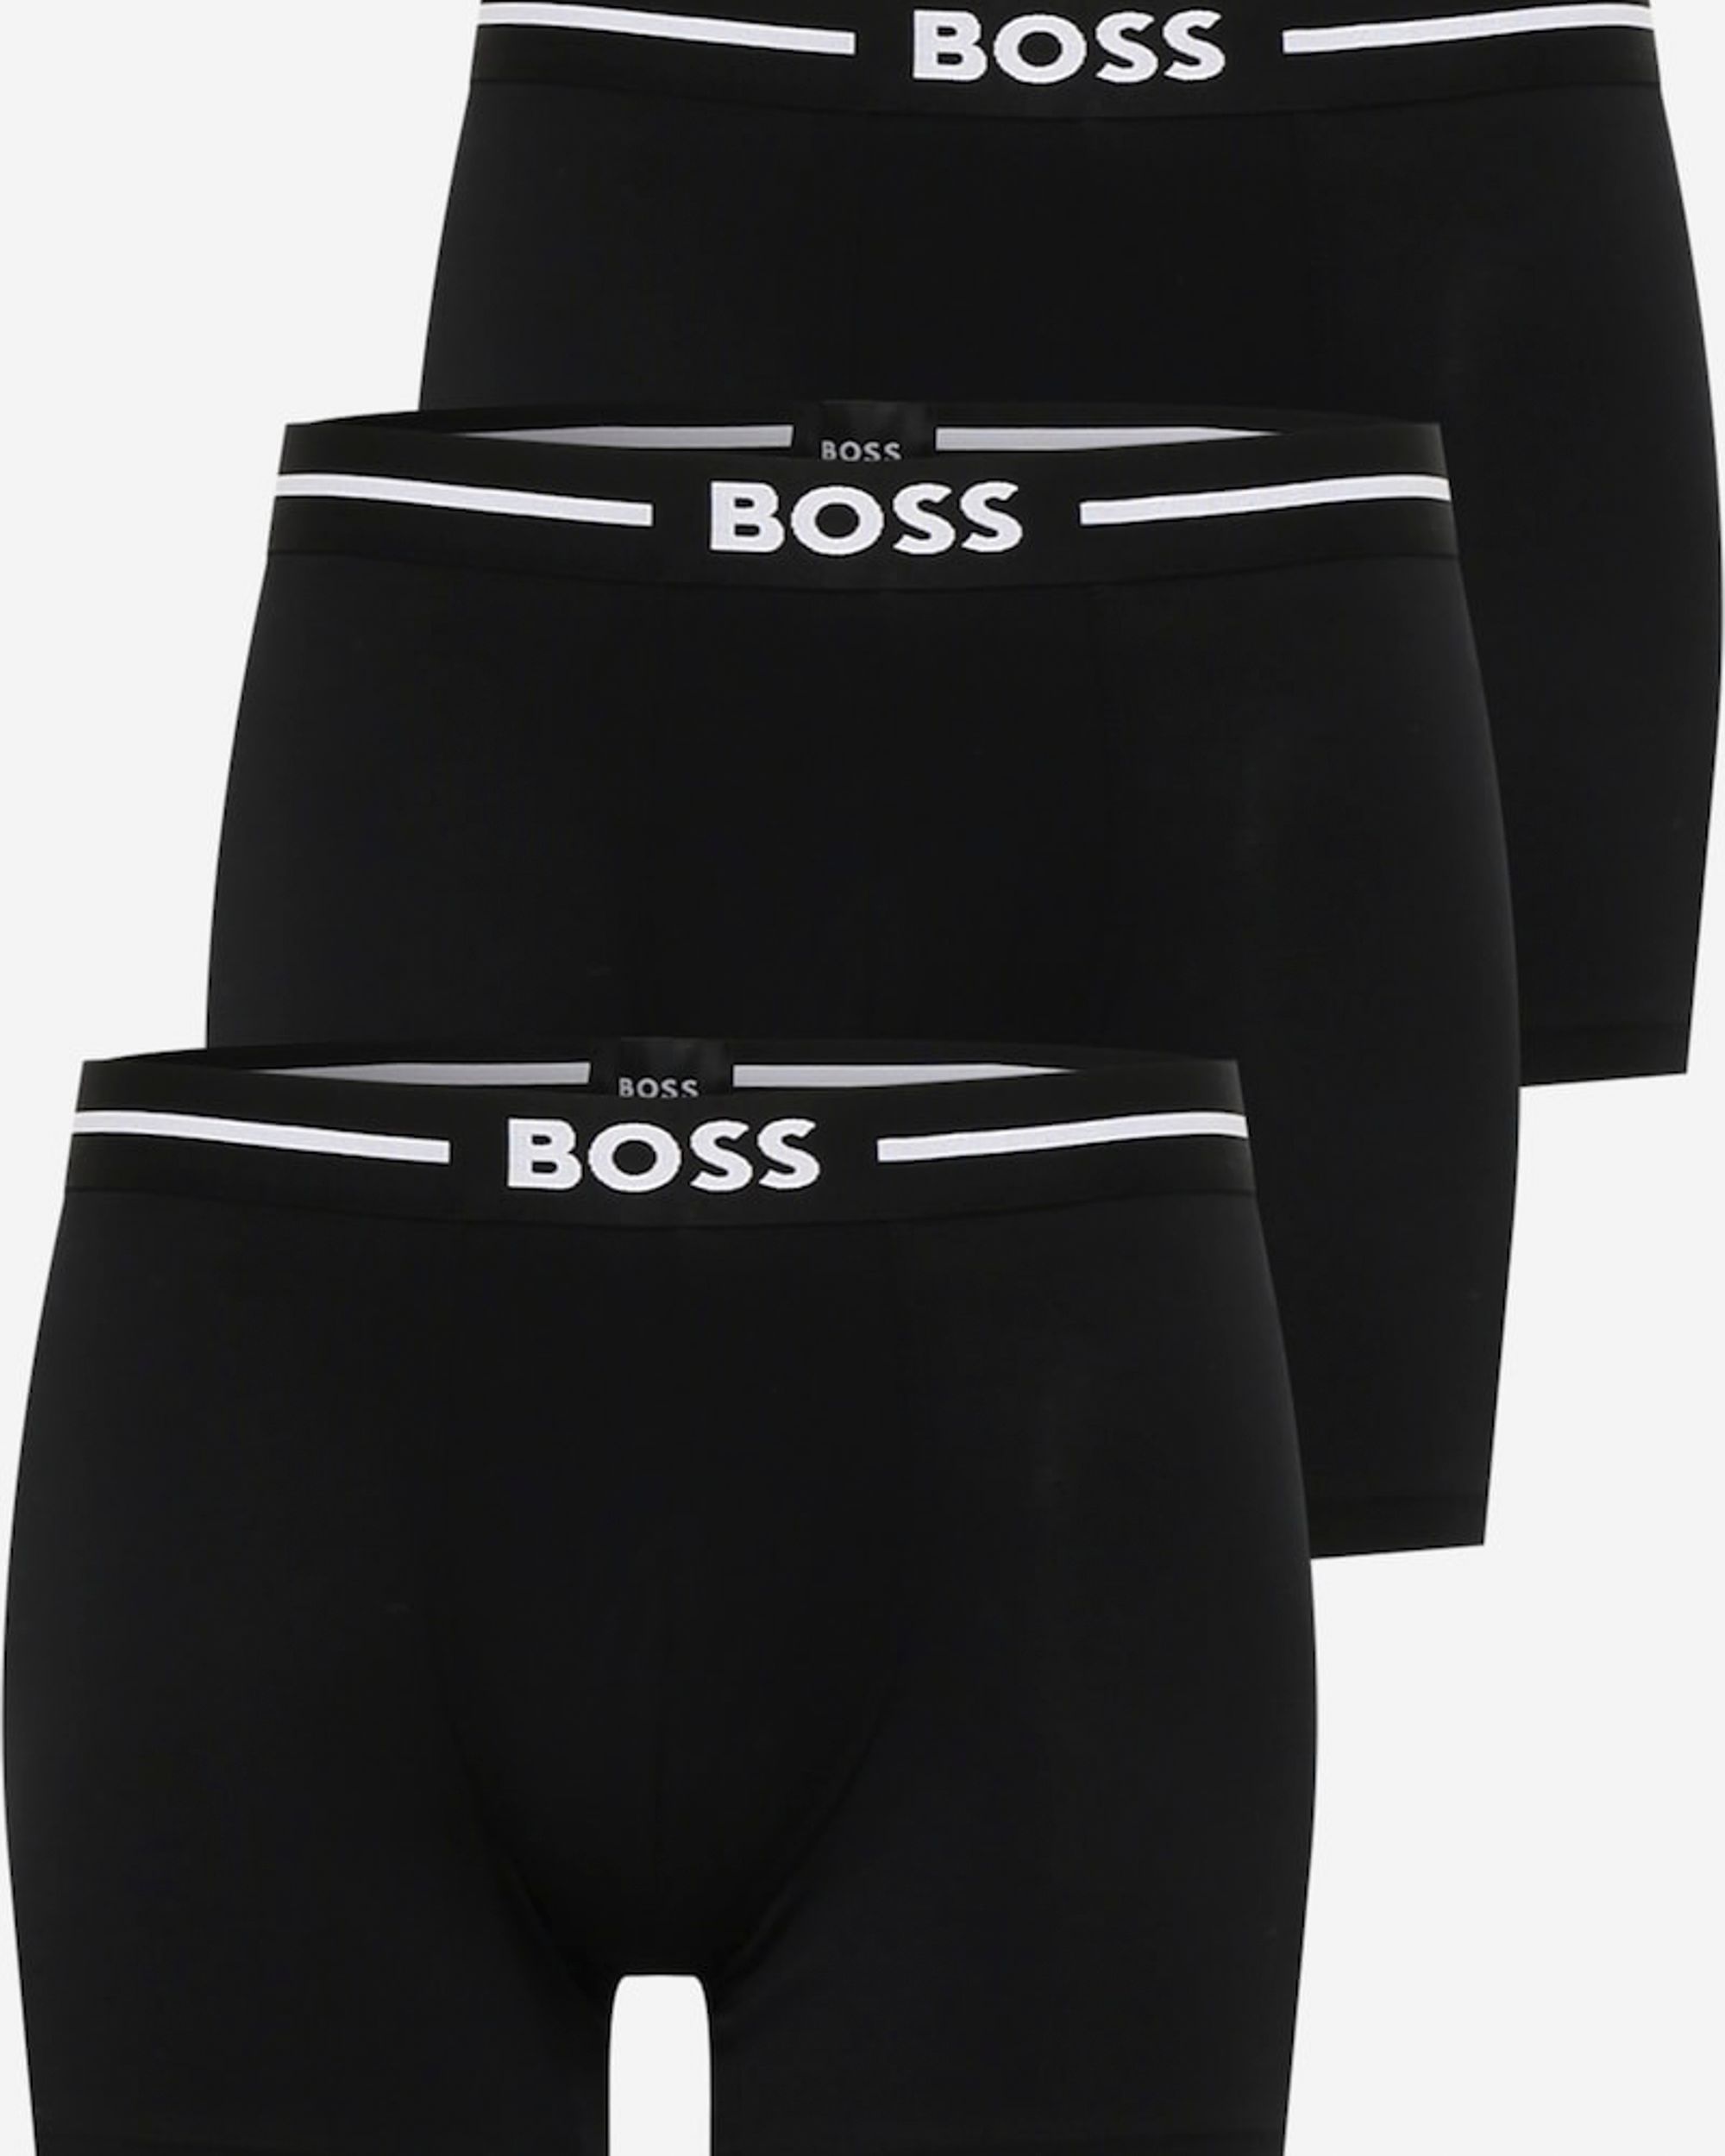 Boss Boxershort 3-pack Zwart 082271-001-L